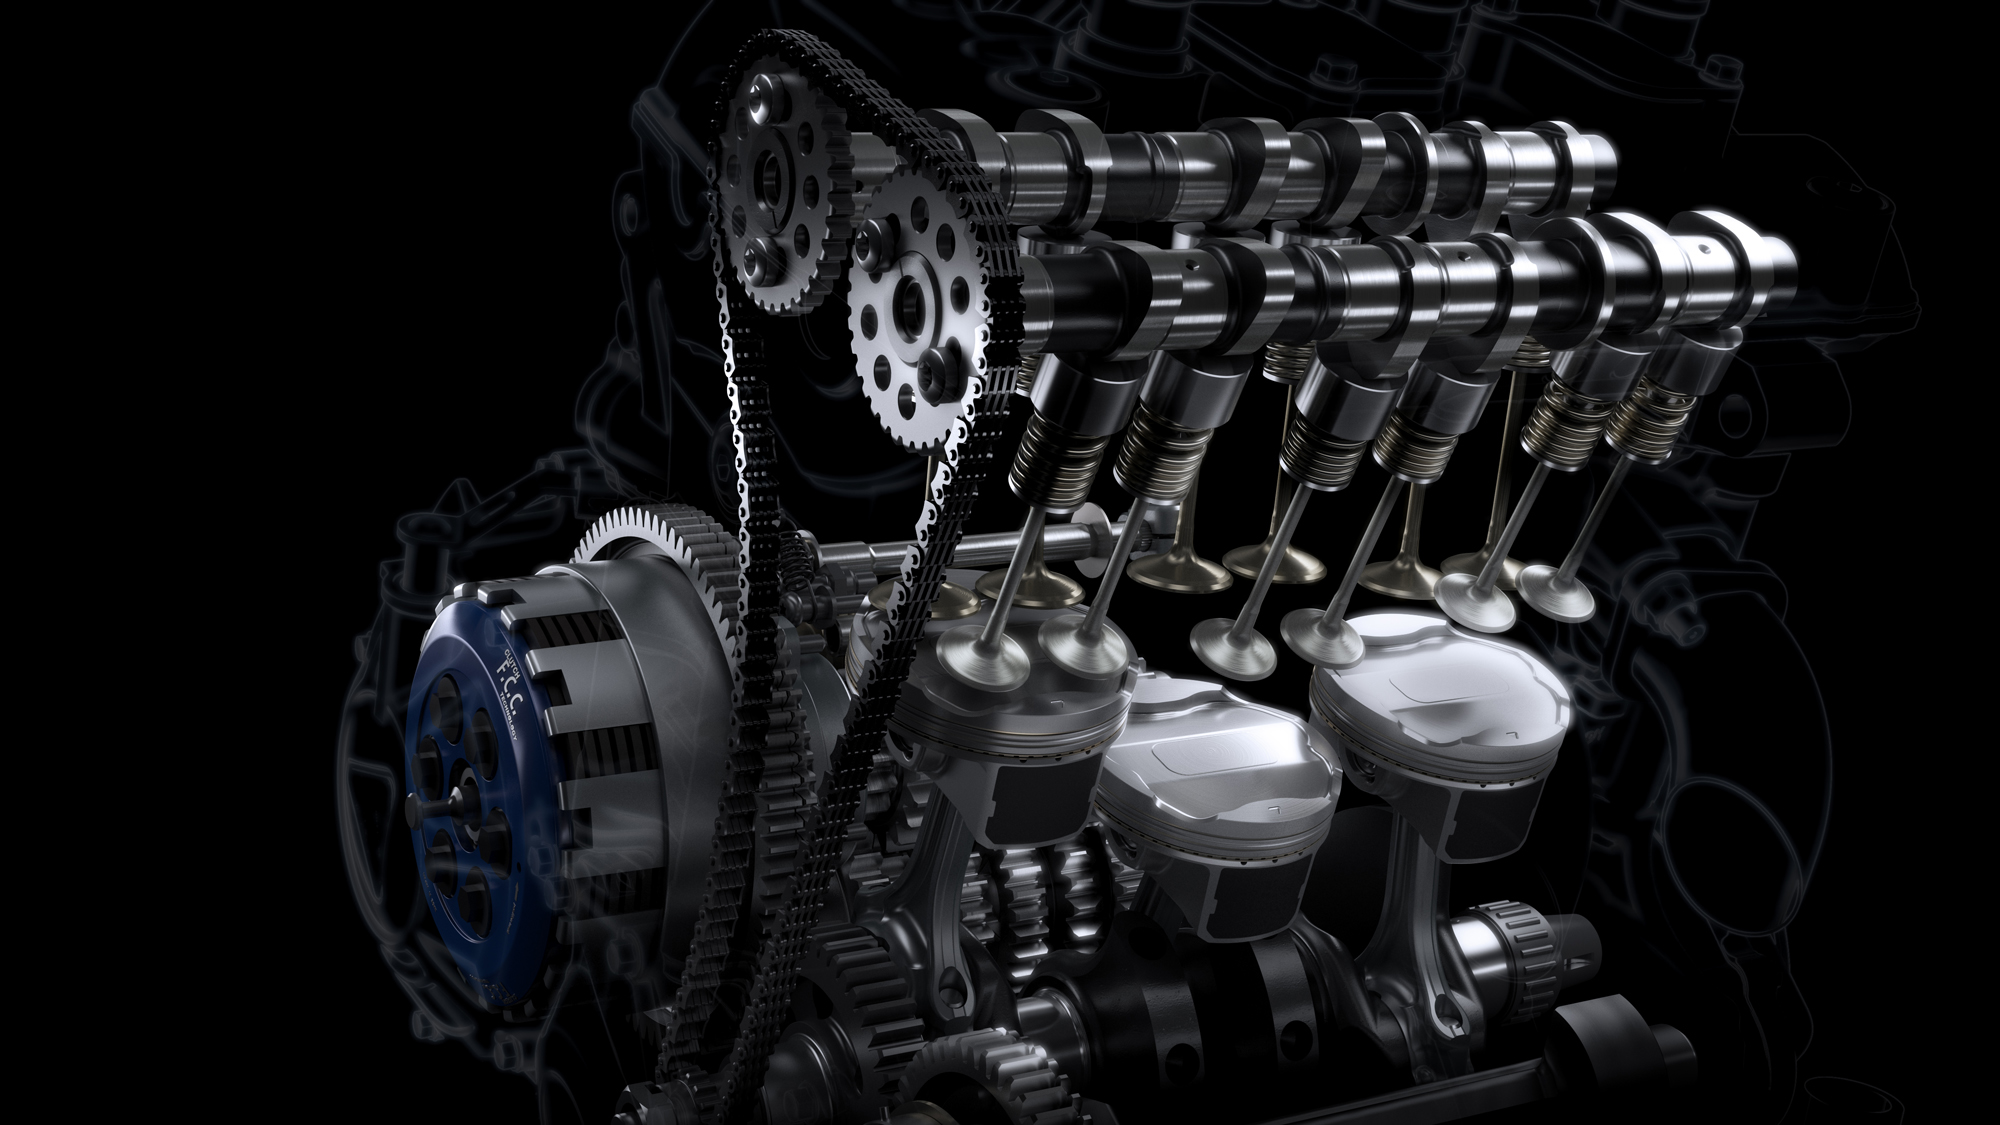 Triumph Power Engine